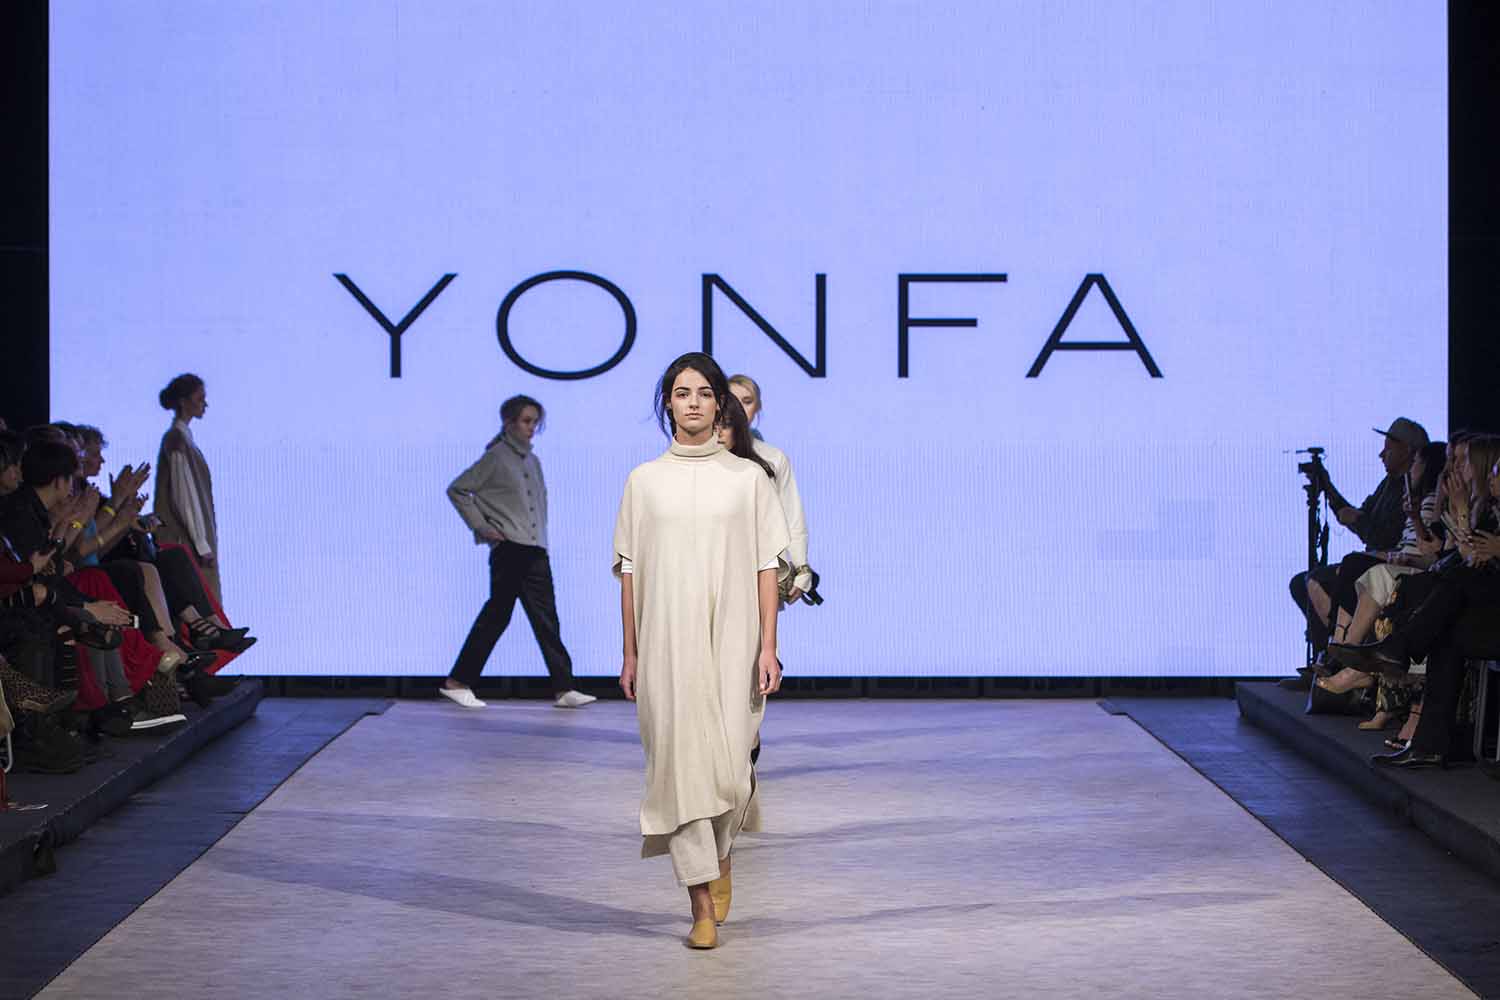 Yonfa Fall 2019 at Vancouver Fashion Week